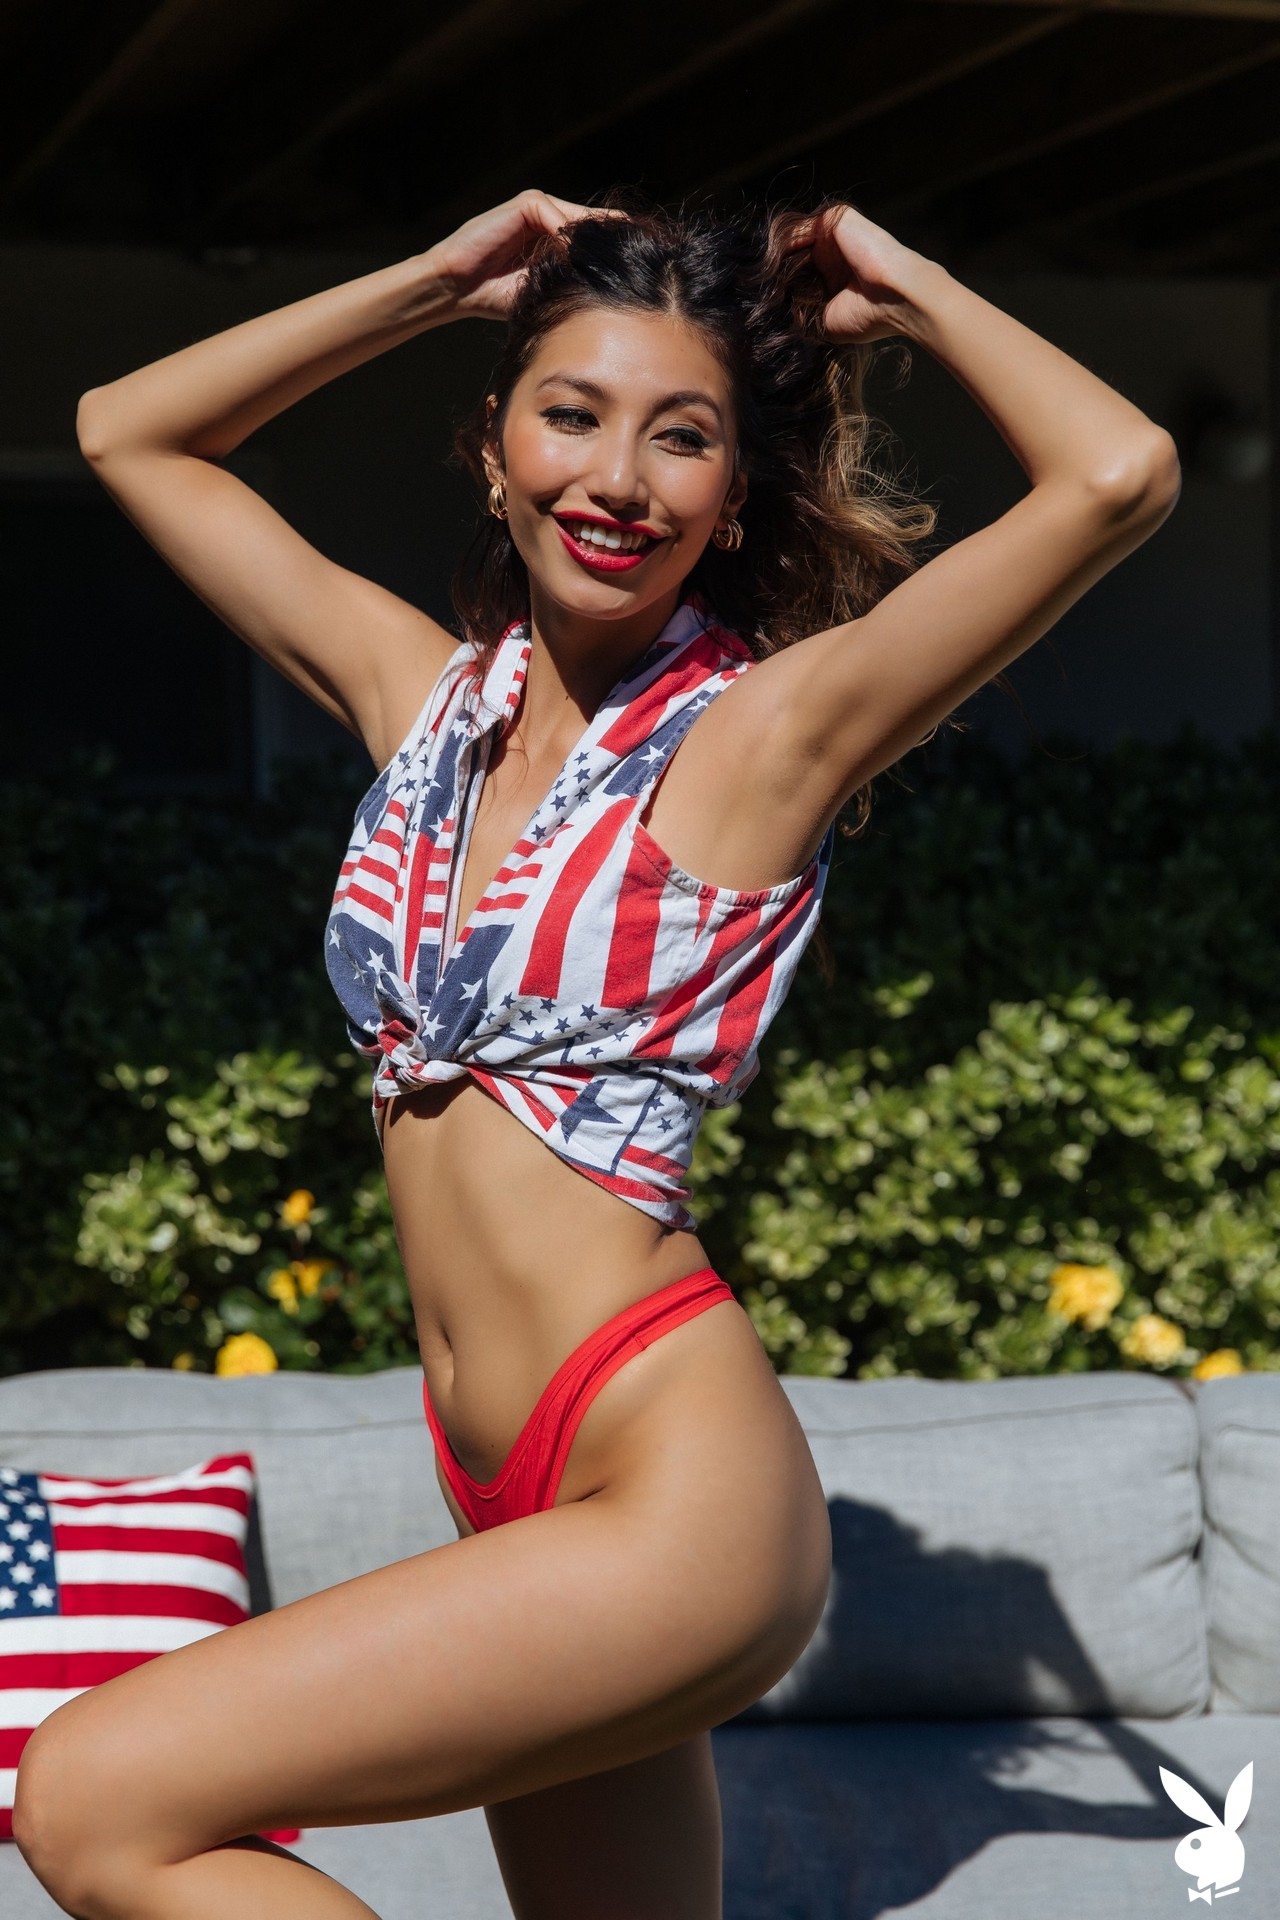 Patriotic Hottie Dominique Lobito Celebrates the Fourth of July in the Nude.